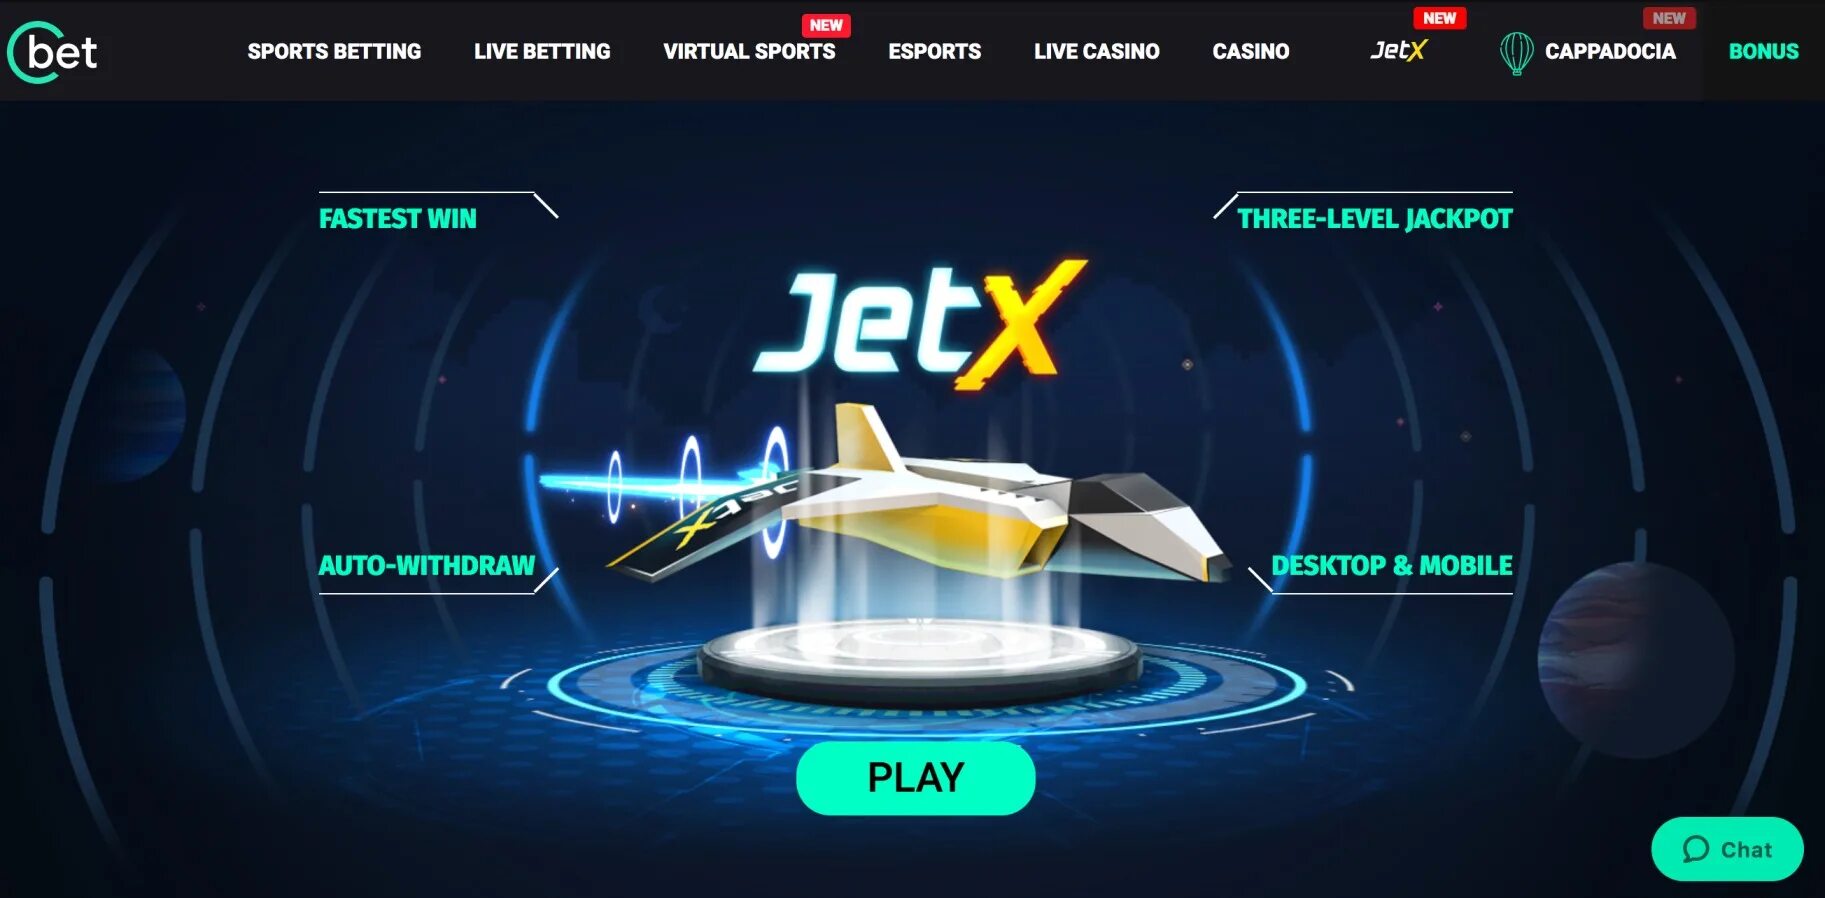 JETX Casino. Jet x. Jet x игра казино. JETX Slot. Jet x игра